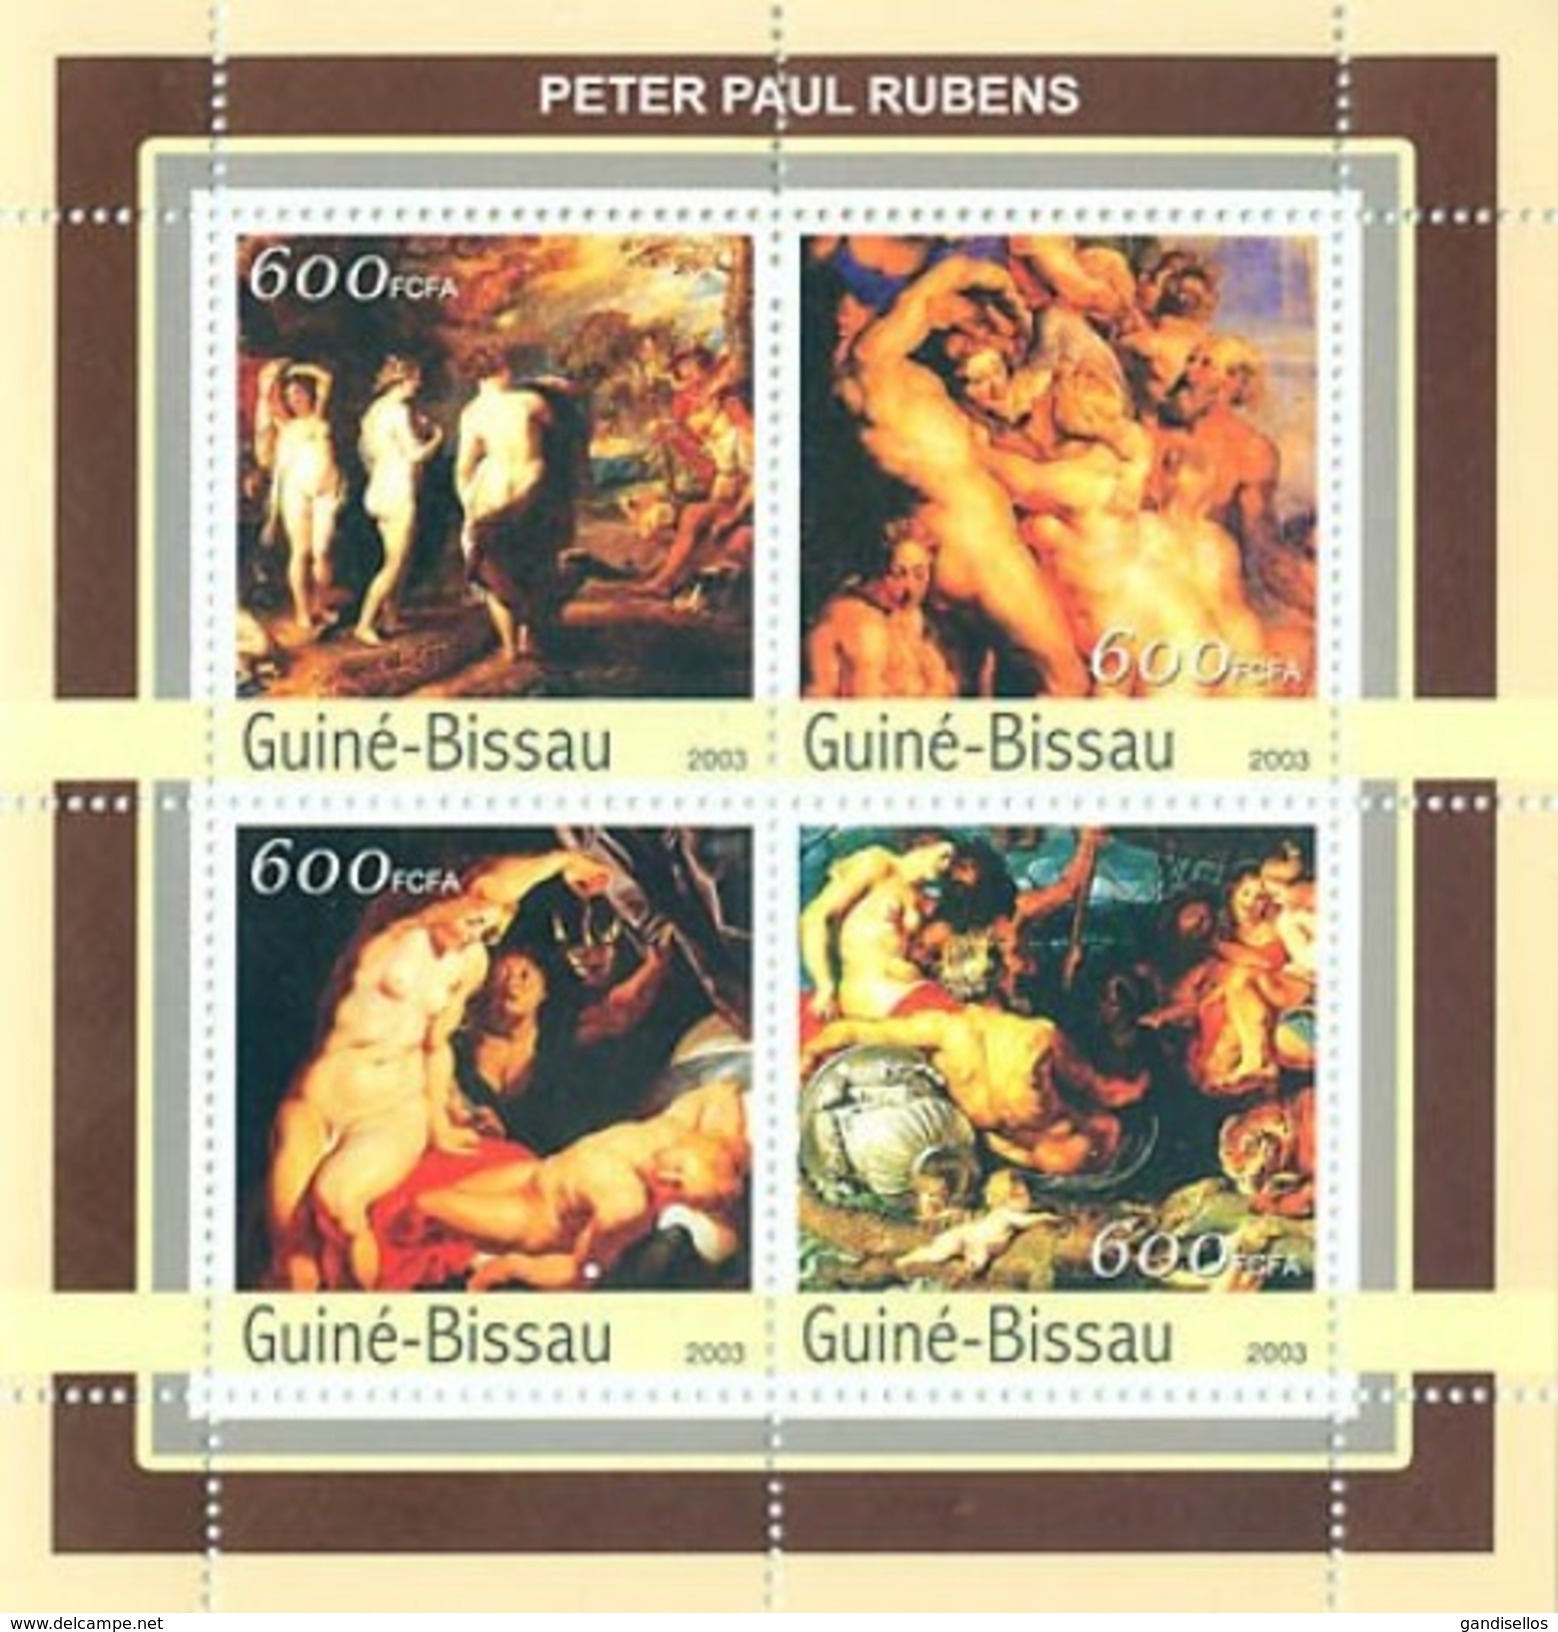 GUINE BISSAU 2003 SHEET PAUL RUBENS ART PAINTINGS ARTE PINTURAS Gb3149 - Guinea-Bissau